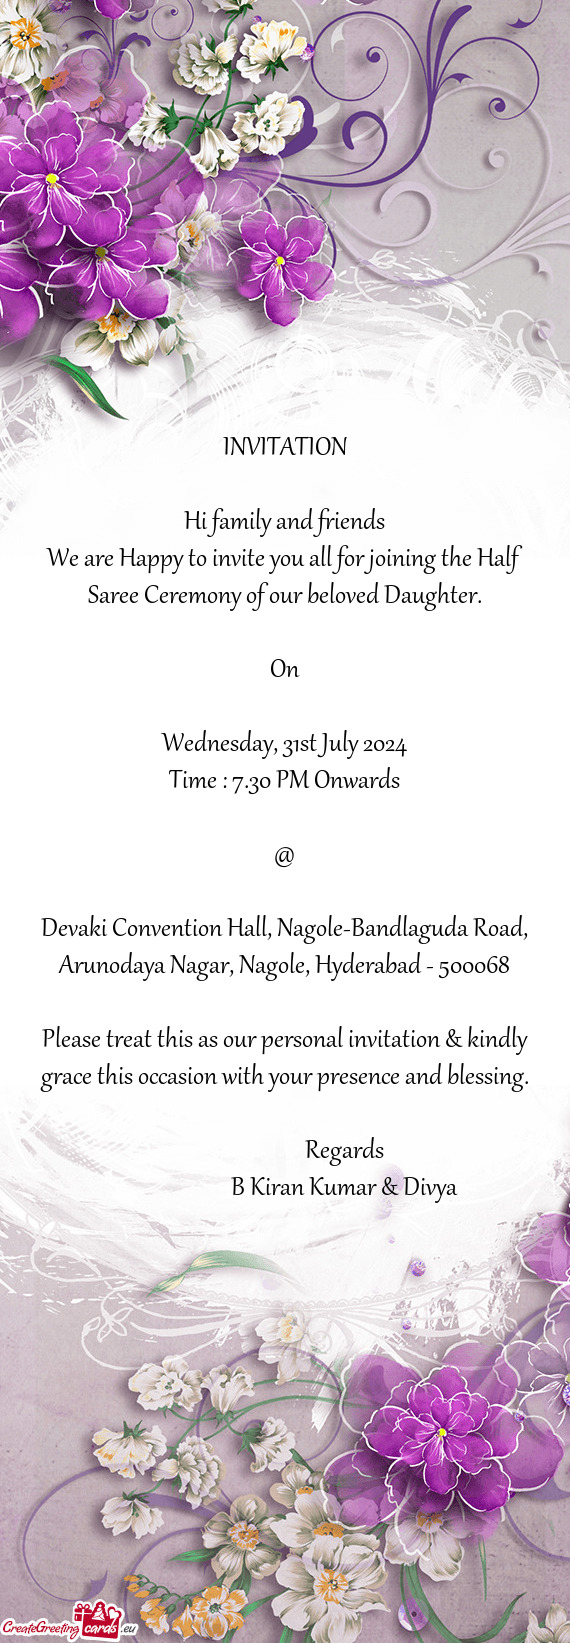 Devaki Convention Hall, Nagole-Bandlaguda Road, Arunodaya Nagar, Nagole, Hyderabad - 500068